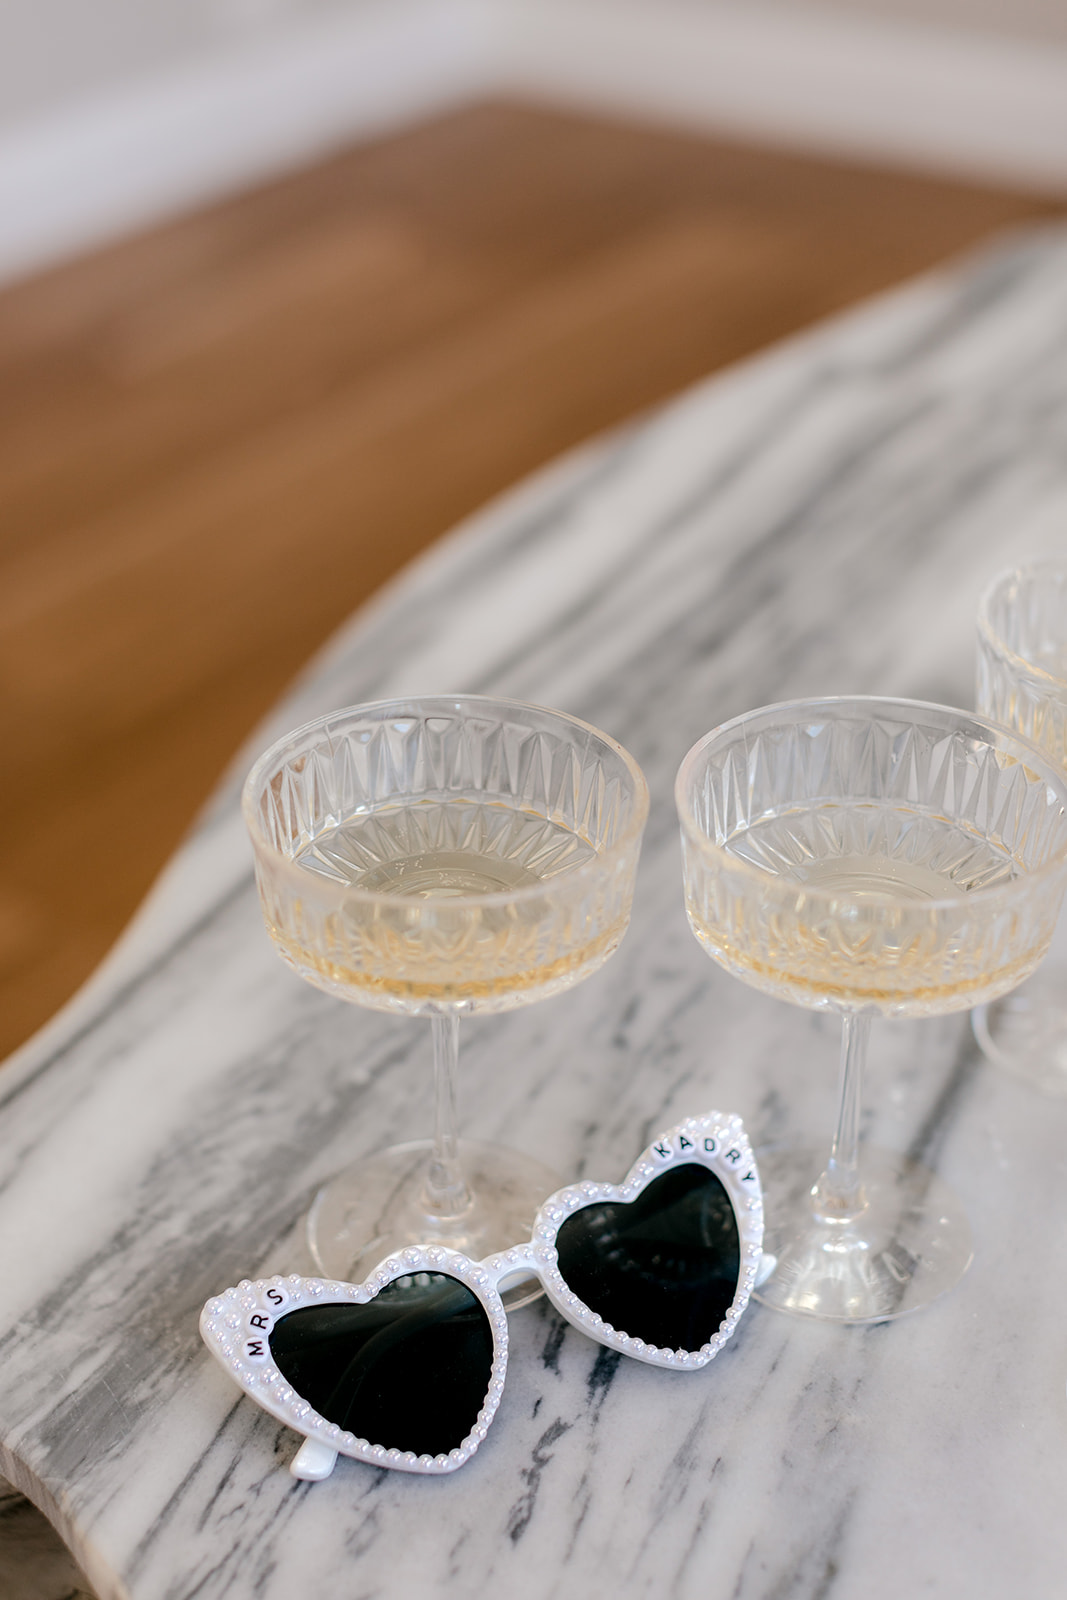 Bridal sunglasses with elegant champagne flutes.